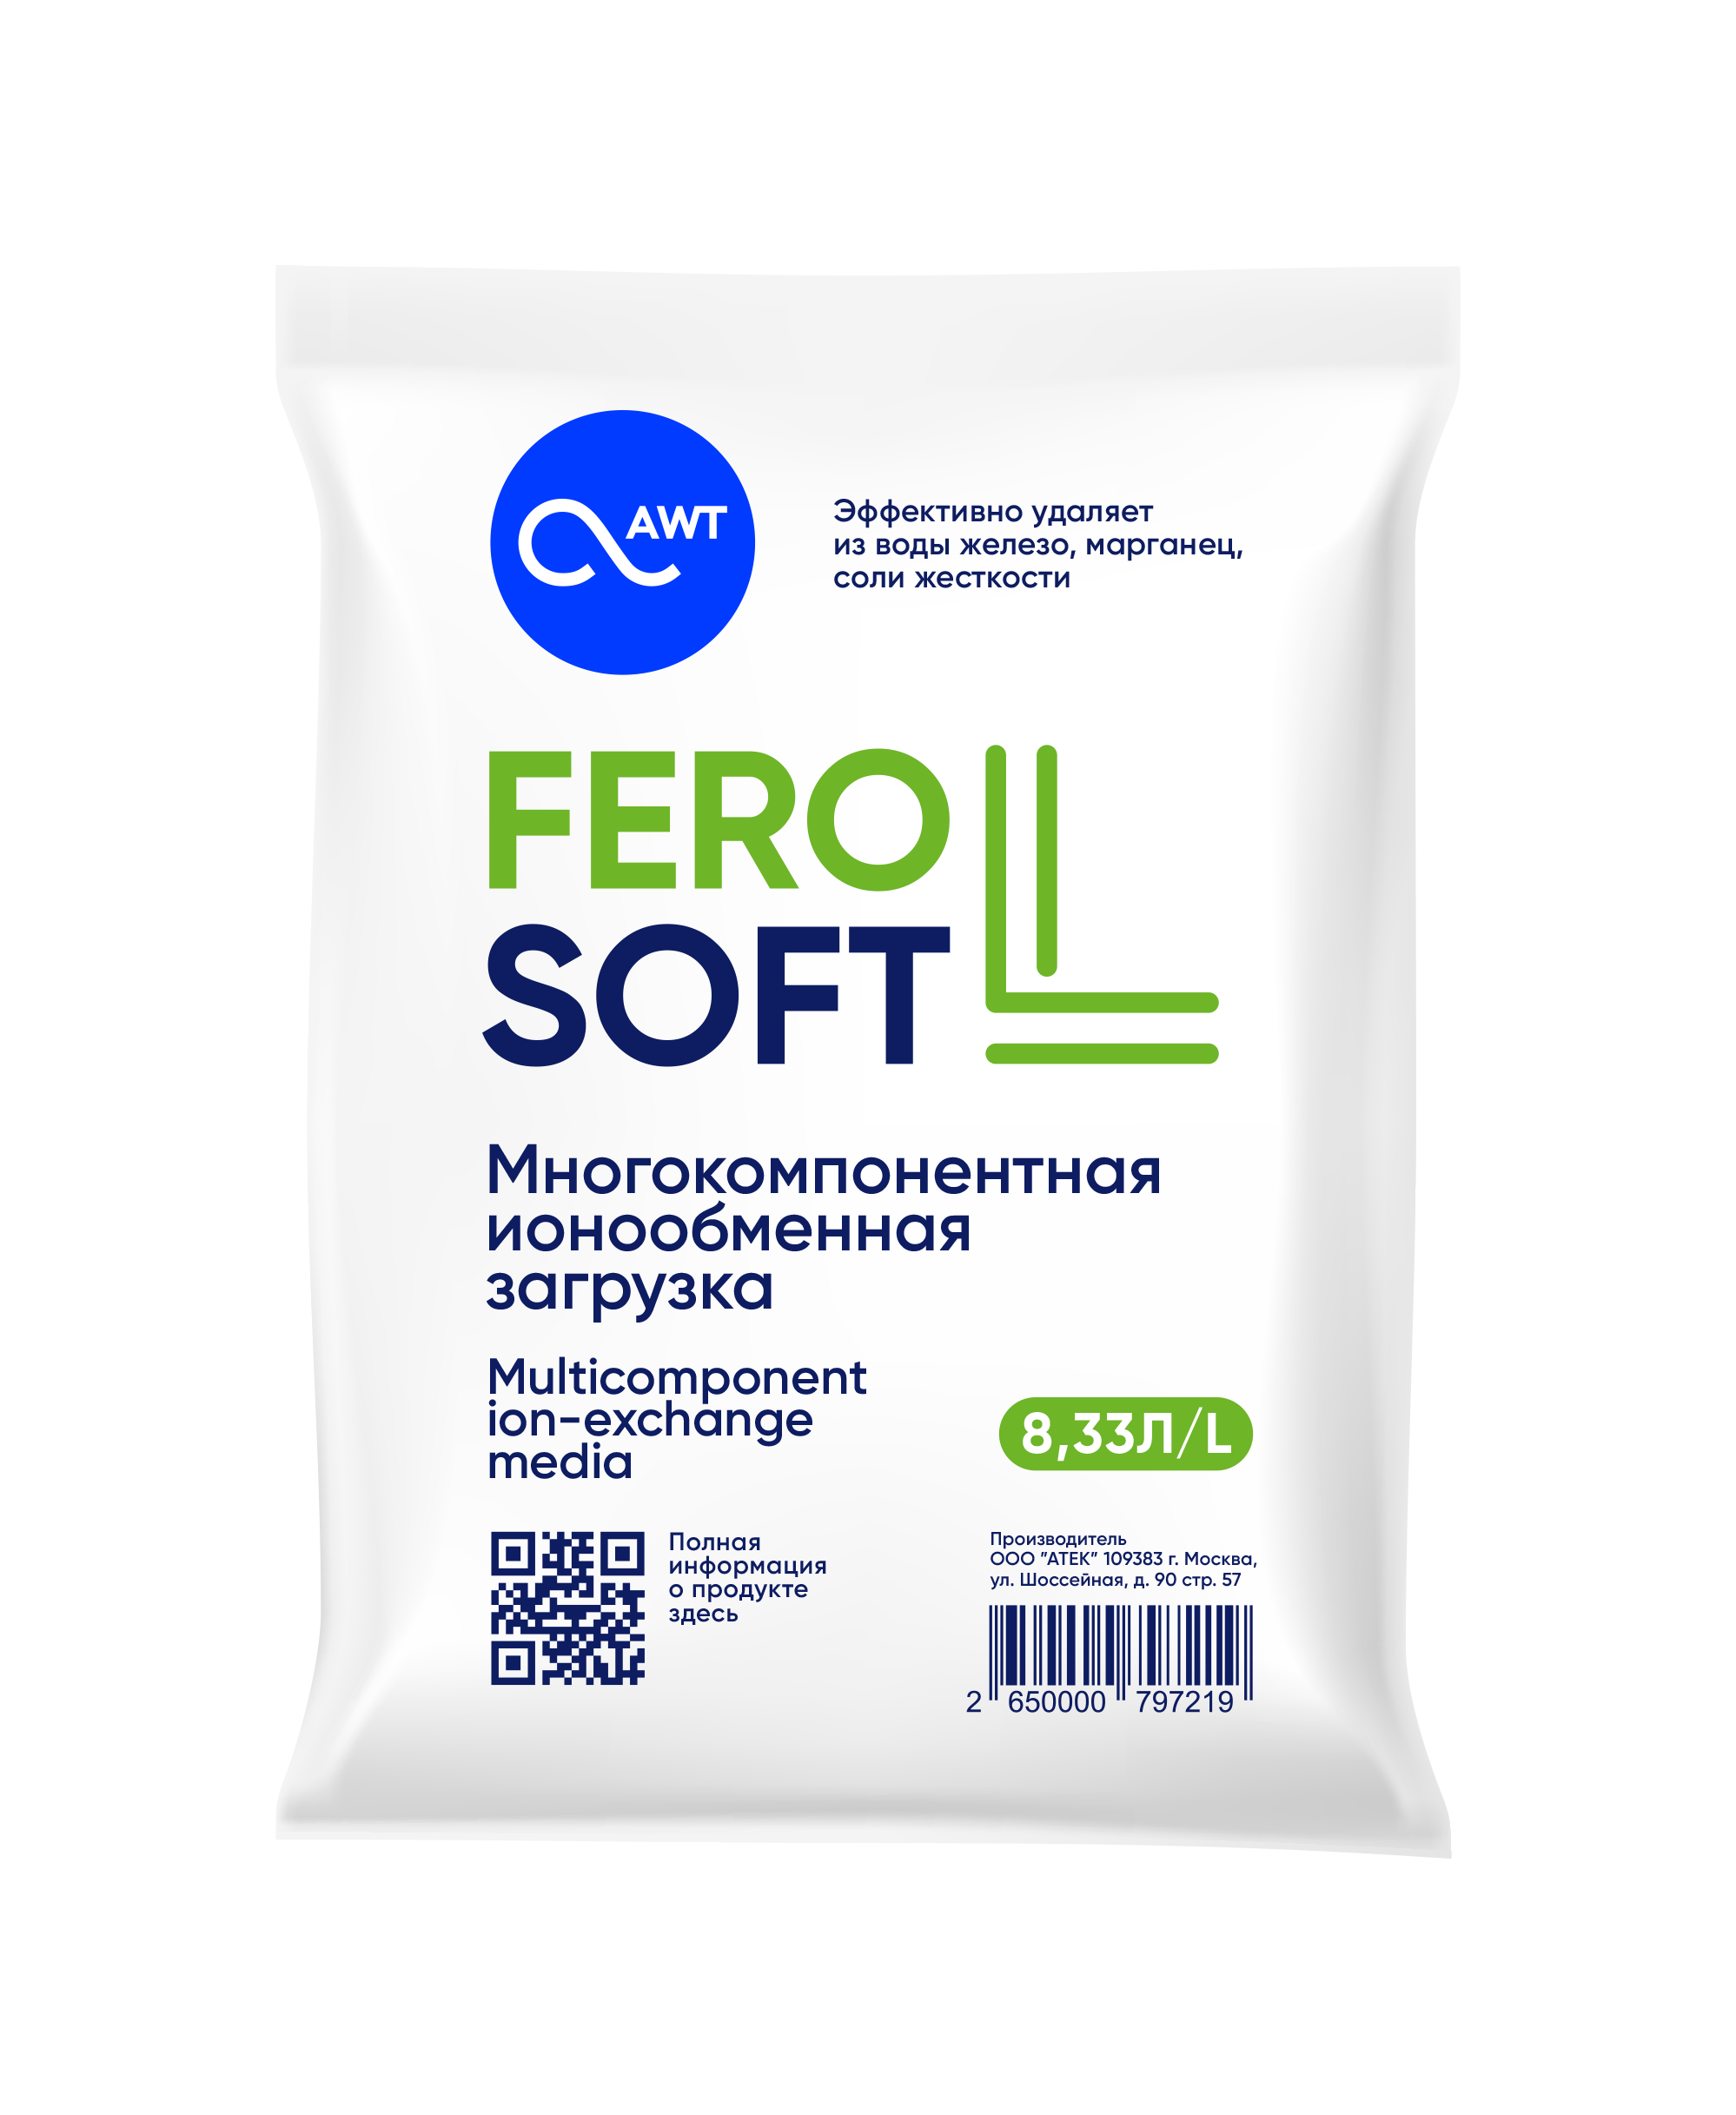  Многокомпонентная загрузка FeroSoft-L (8,33л, 6,7 кг)